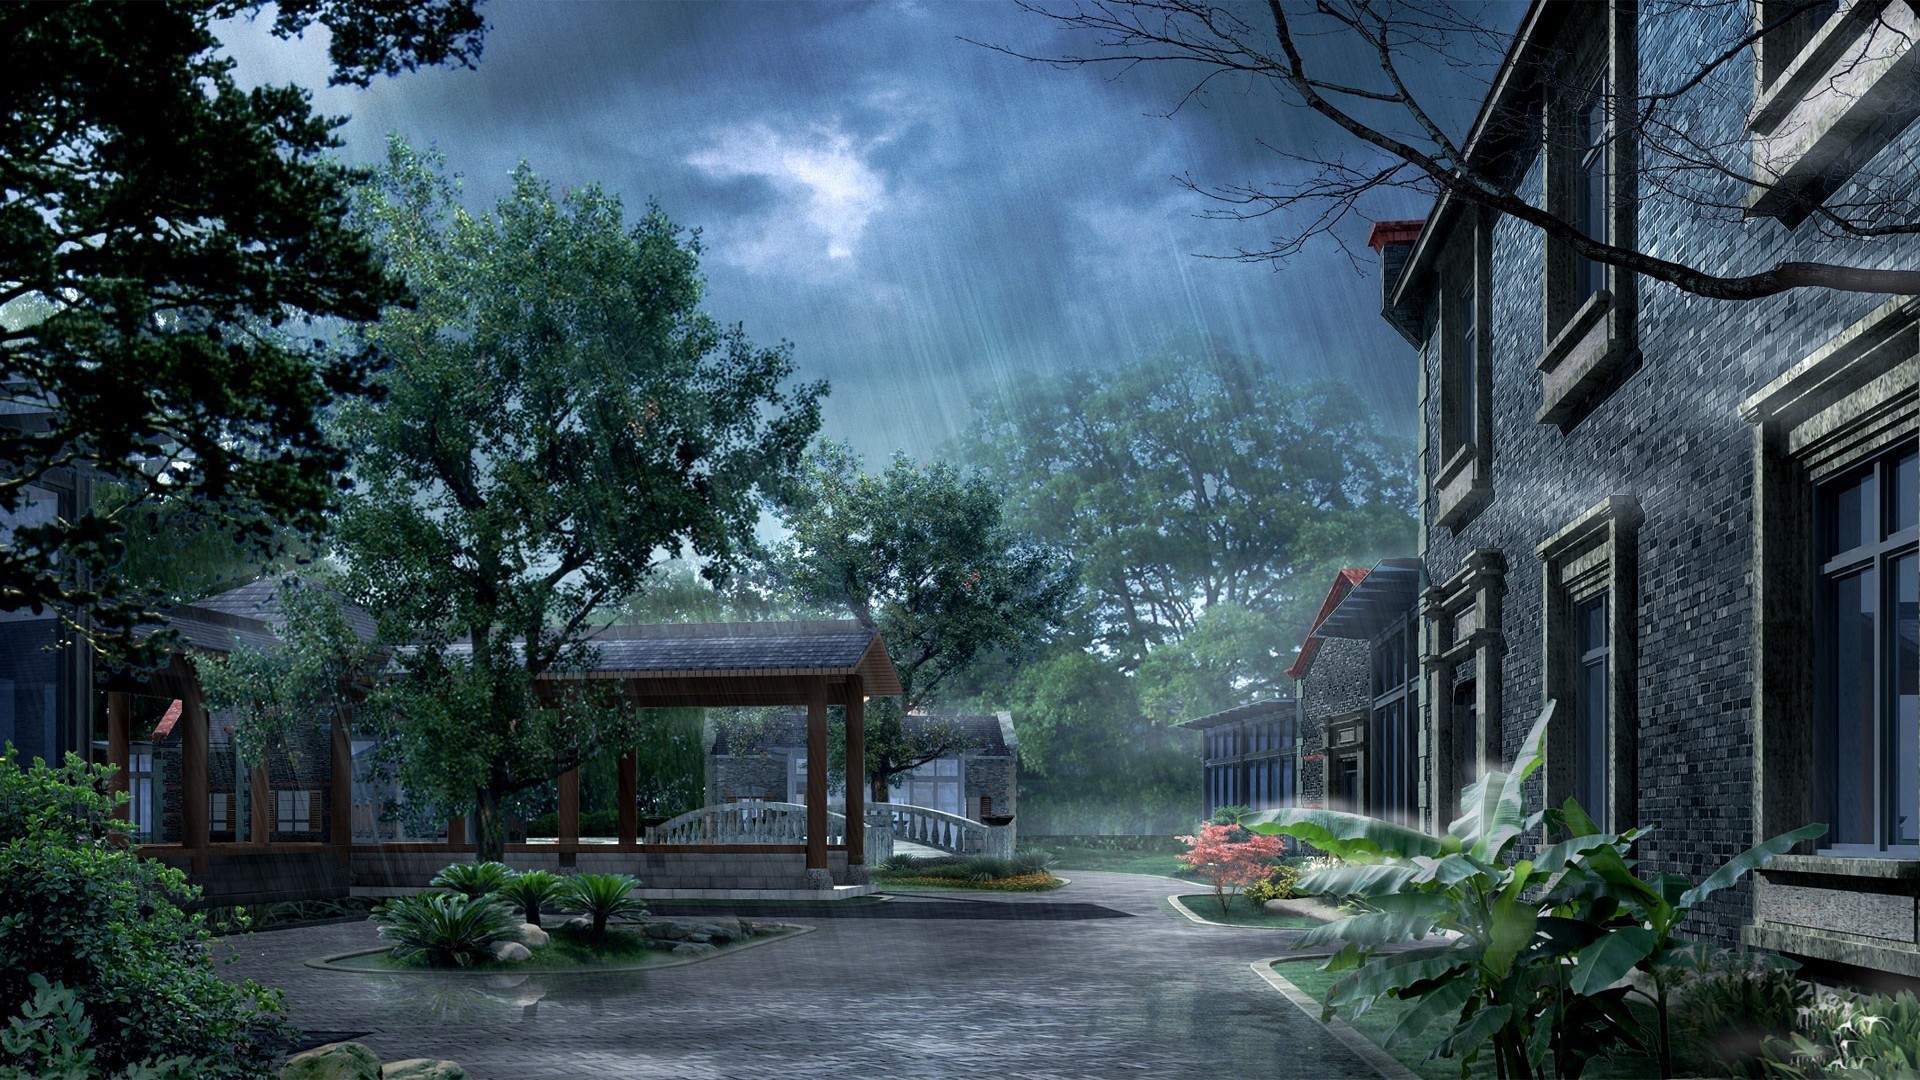 rainy season hd wallpaper,nature,sky,house,tree,residential area